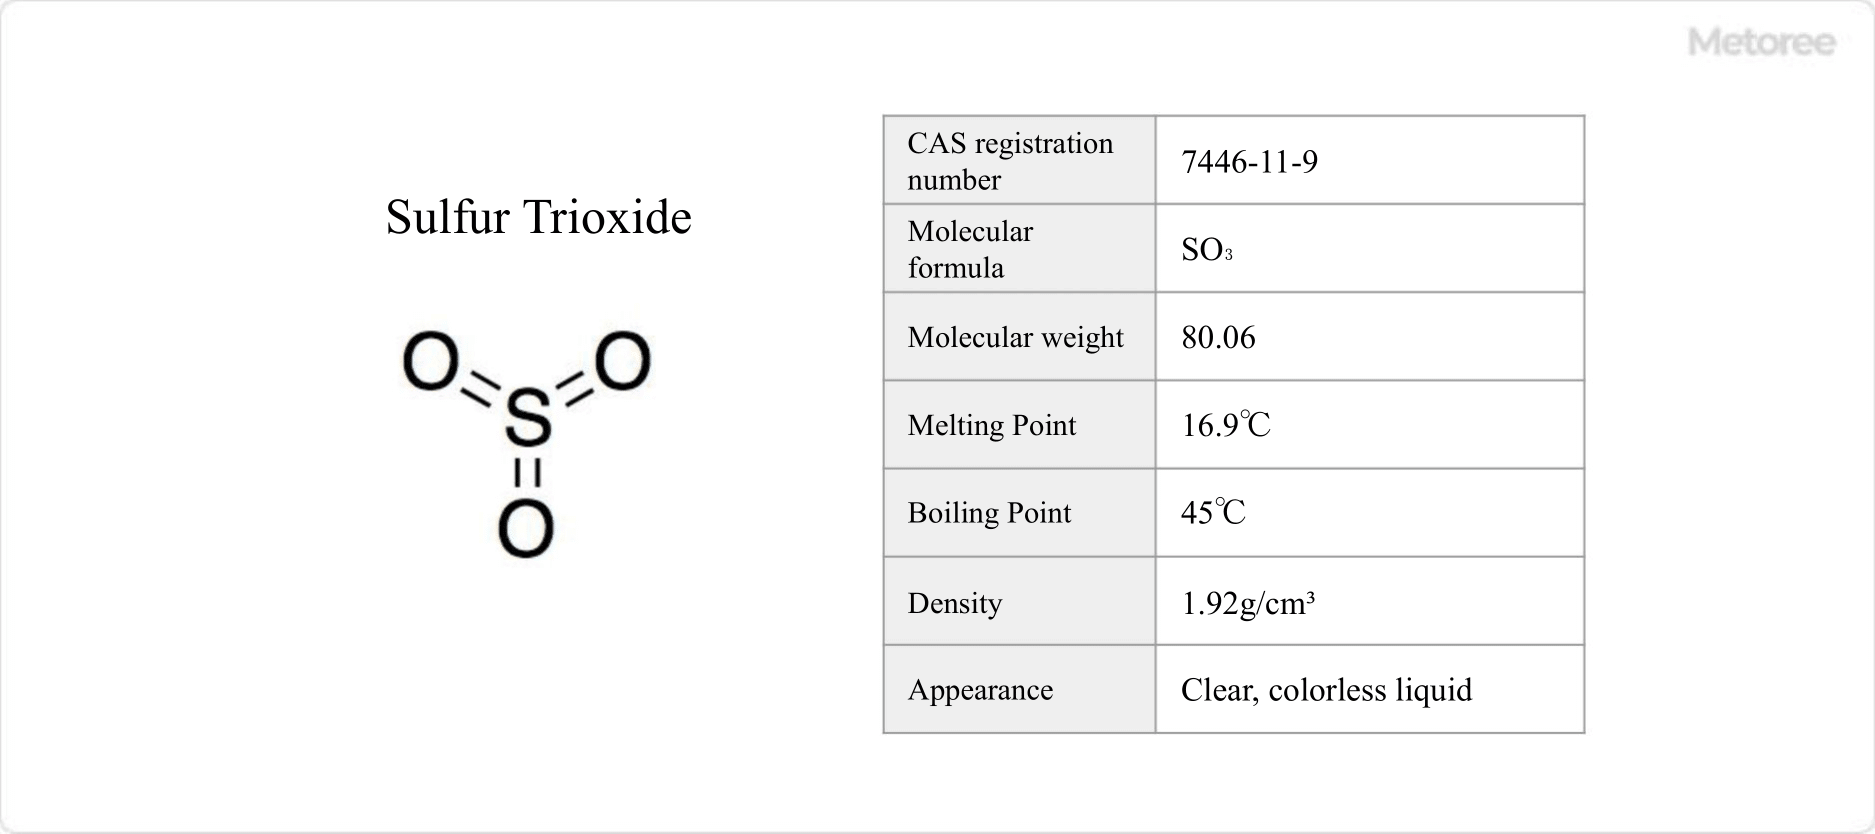 Figure 1. Basic Information on Sulfur Trioxide